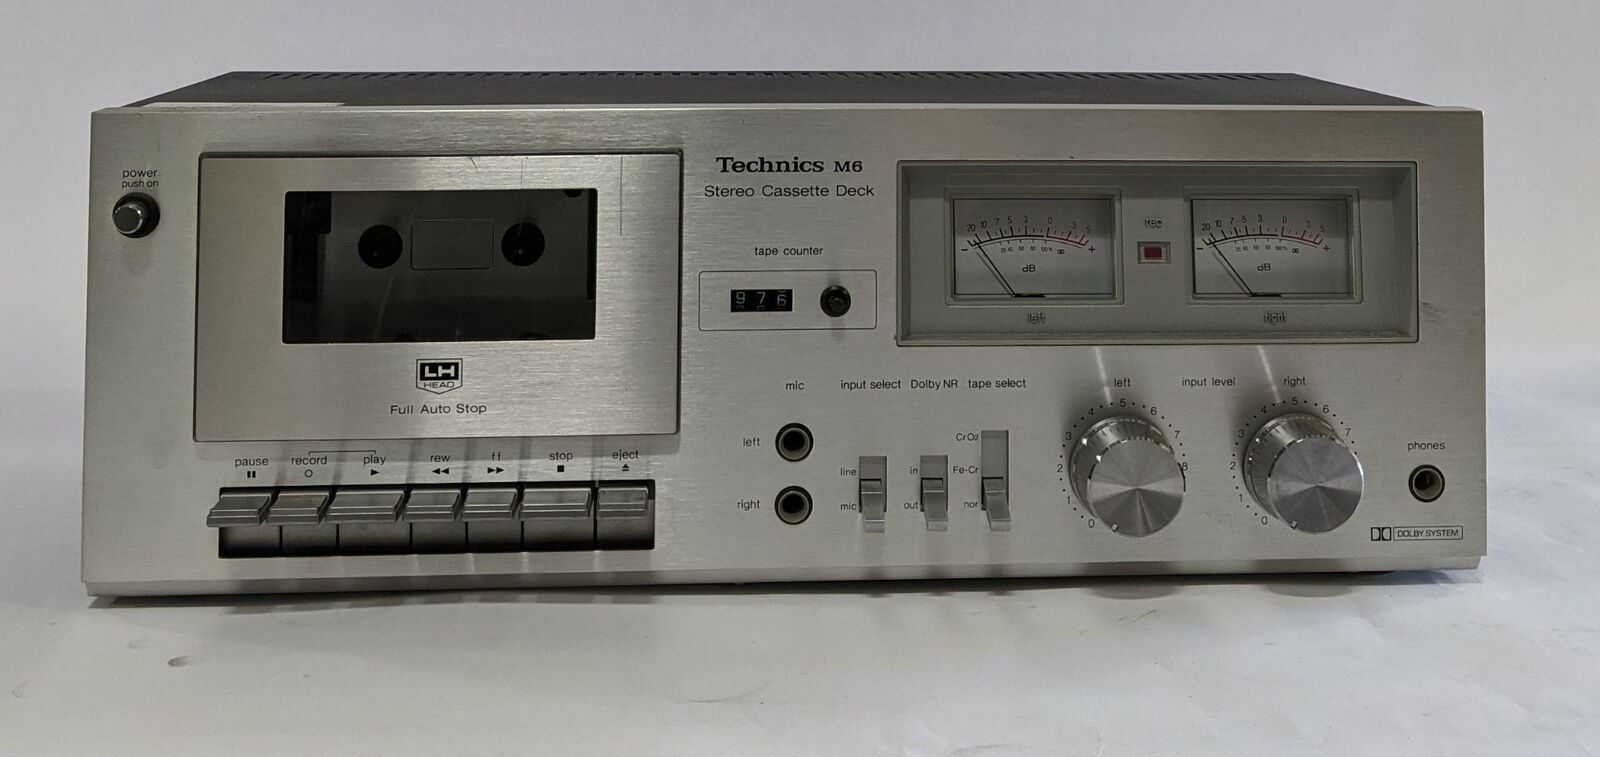 Technics M6 Stereo Cassette Deck